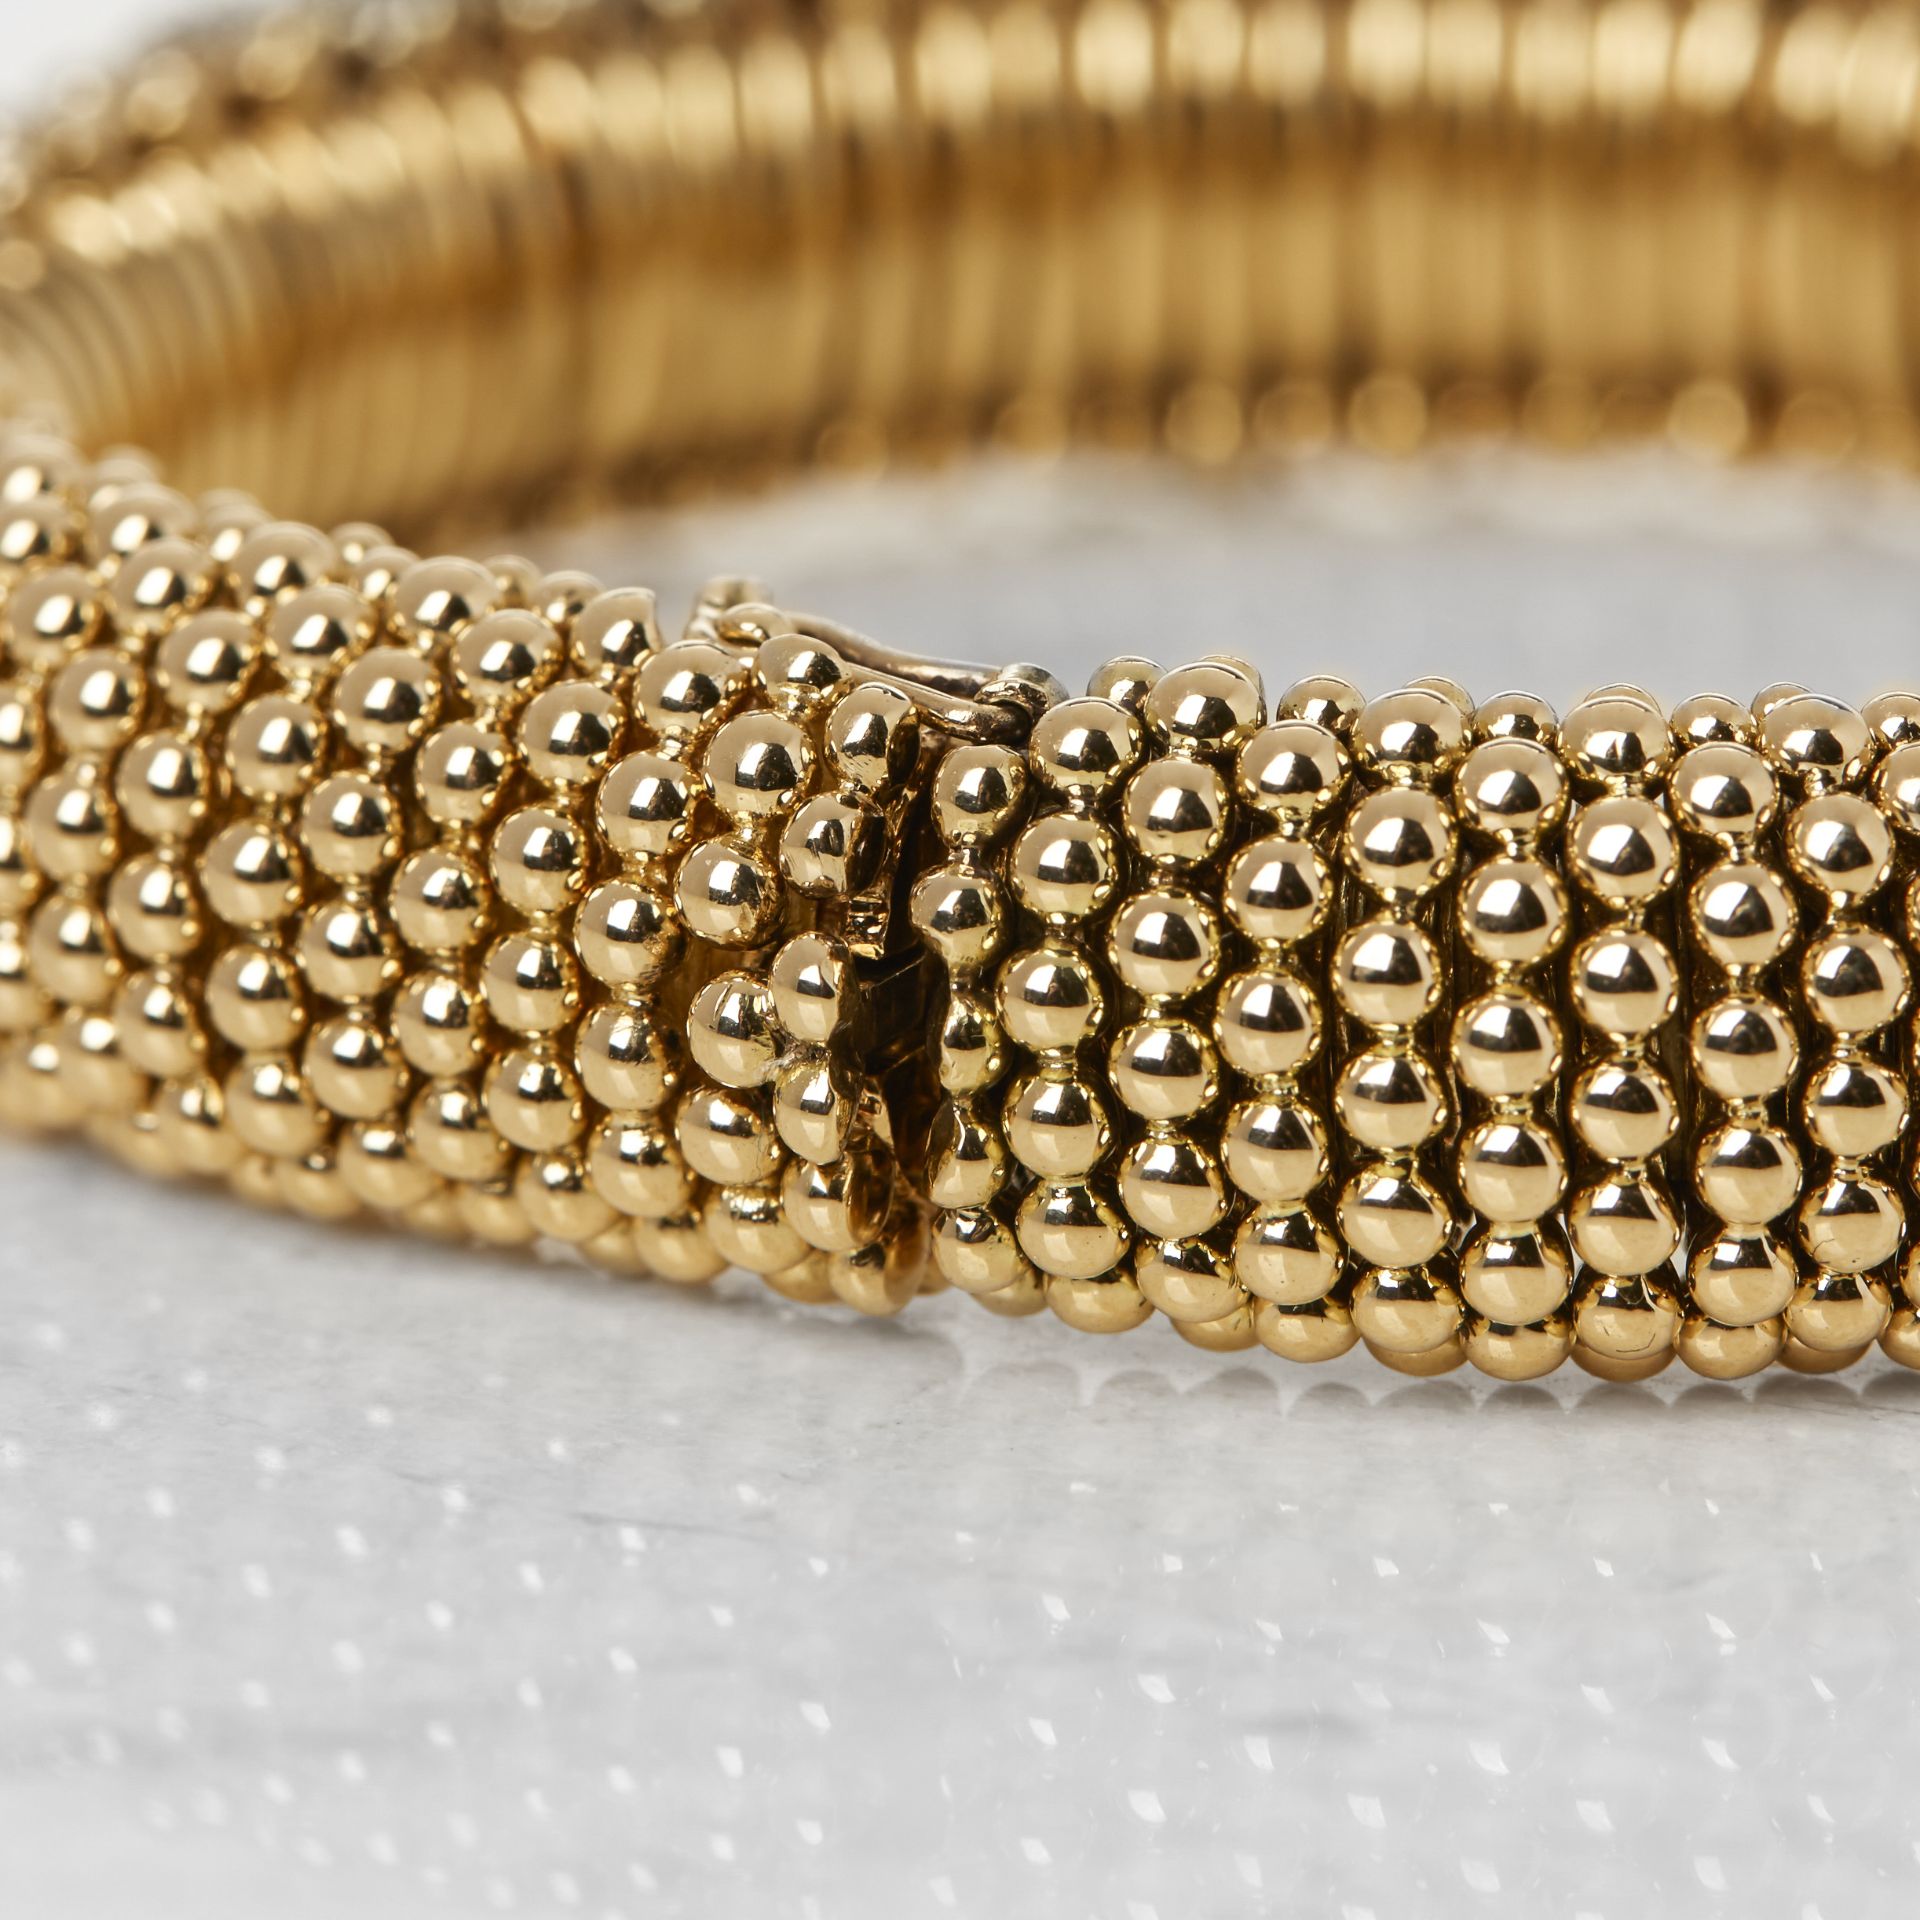 Van Cleef & Arpels 18k Yellow Gold Ruby & Diamond Vintage Bracelet with Presentation Box - Image 11 of 16